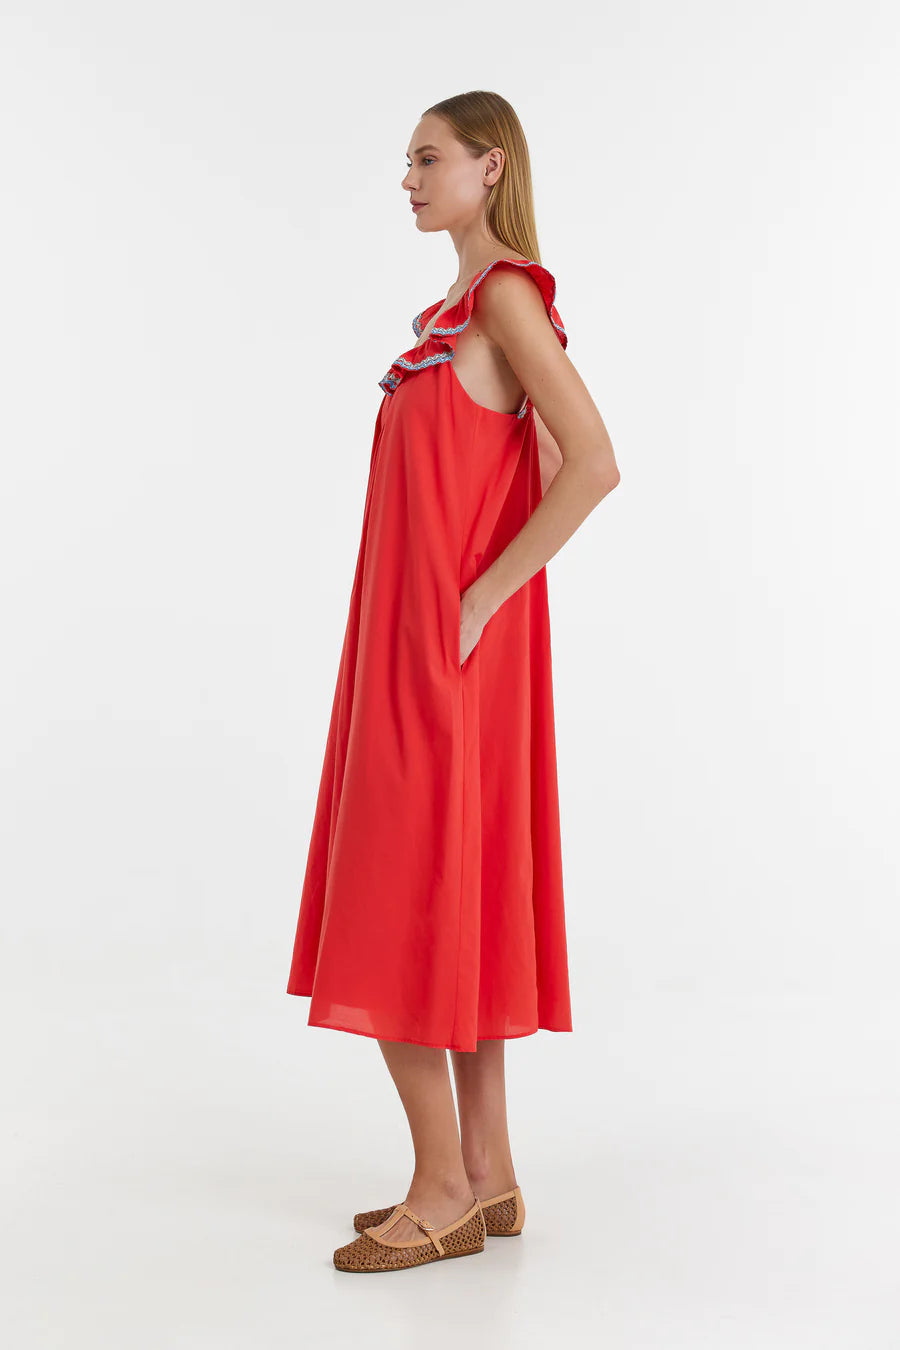 DALIA DRESS - RED